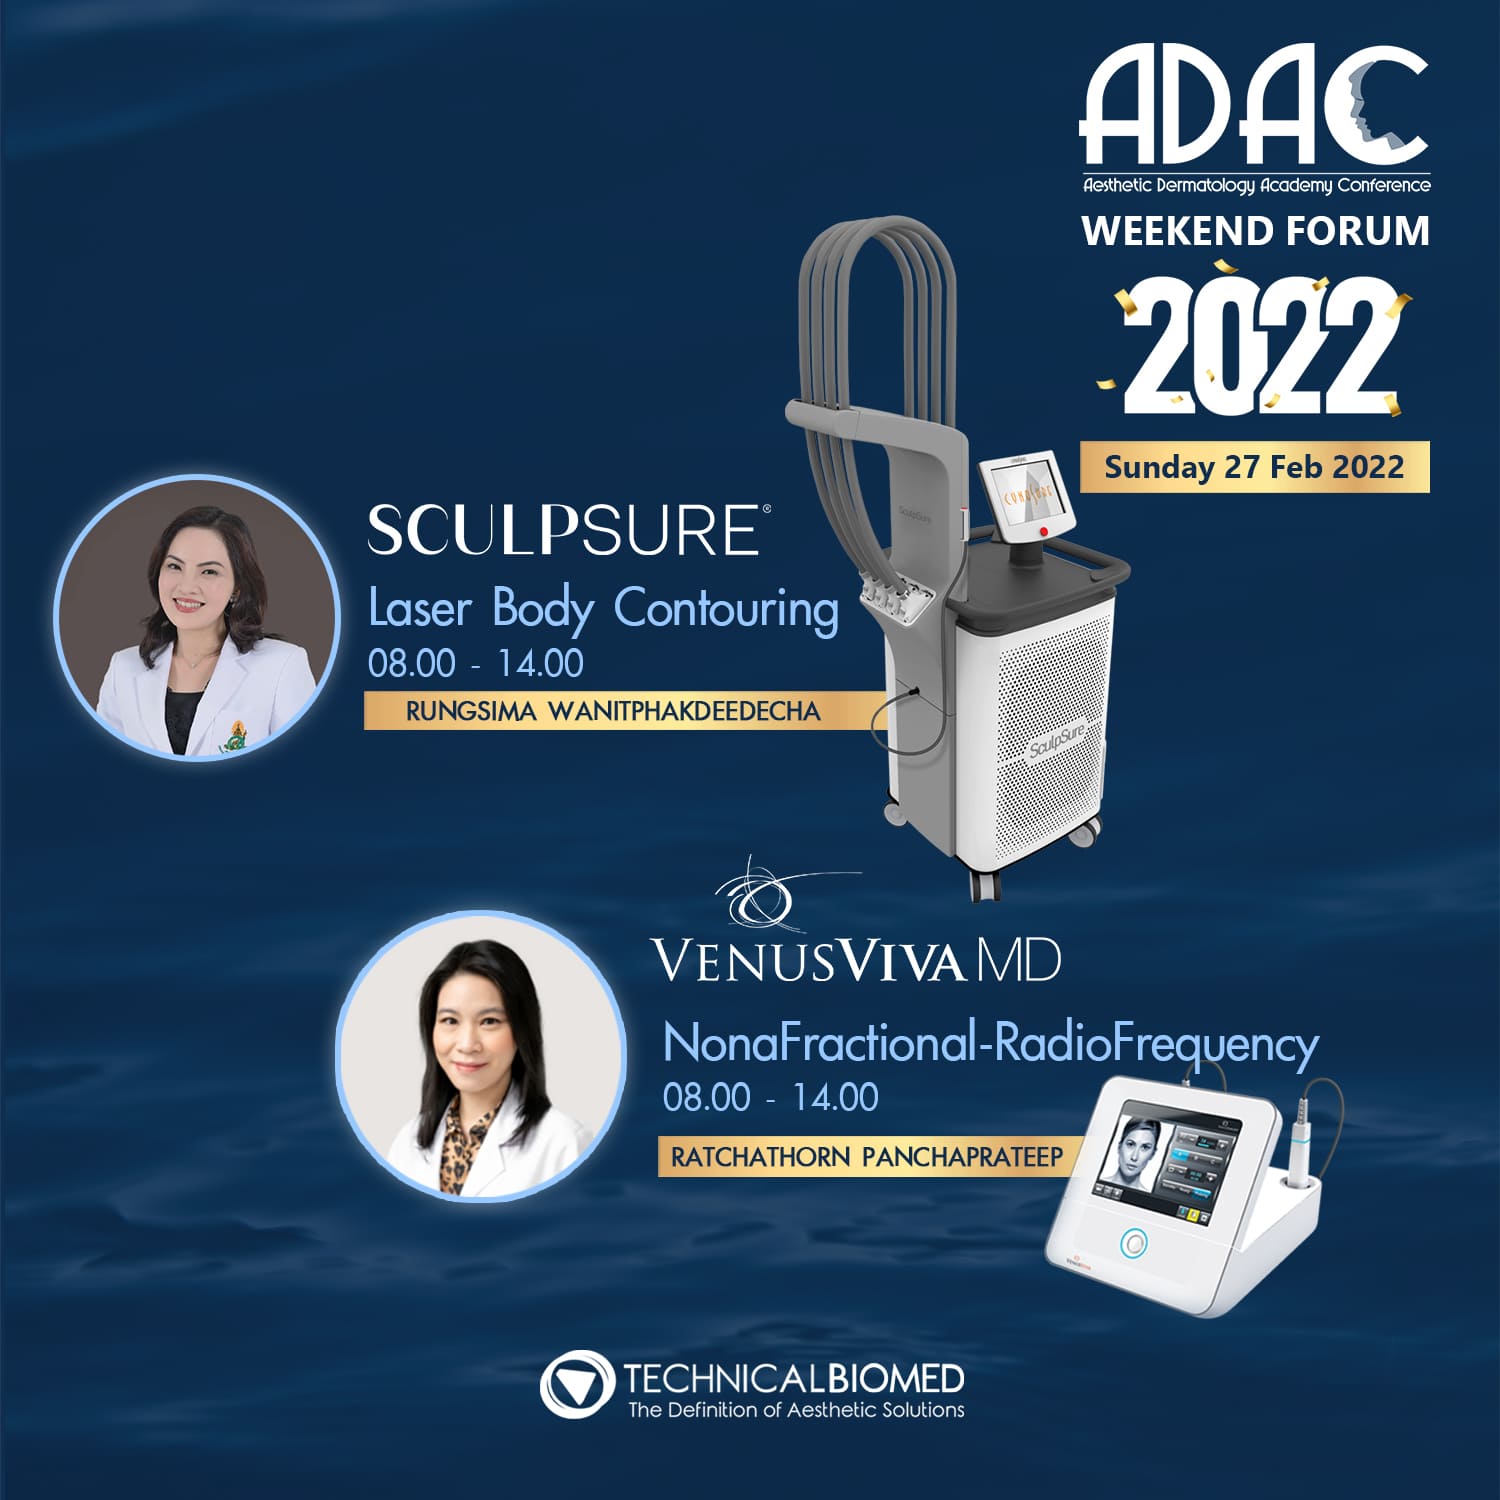 ADAC WEEKEND FORUM 2022